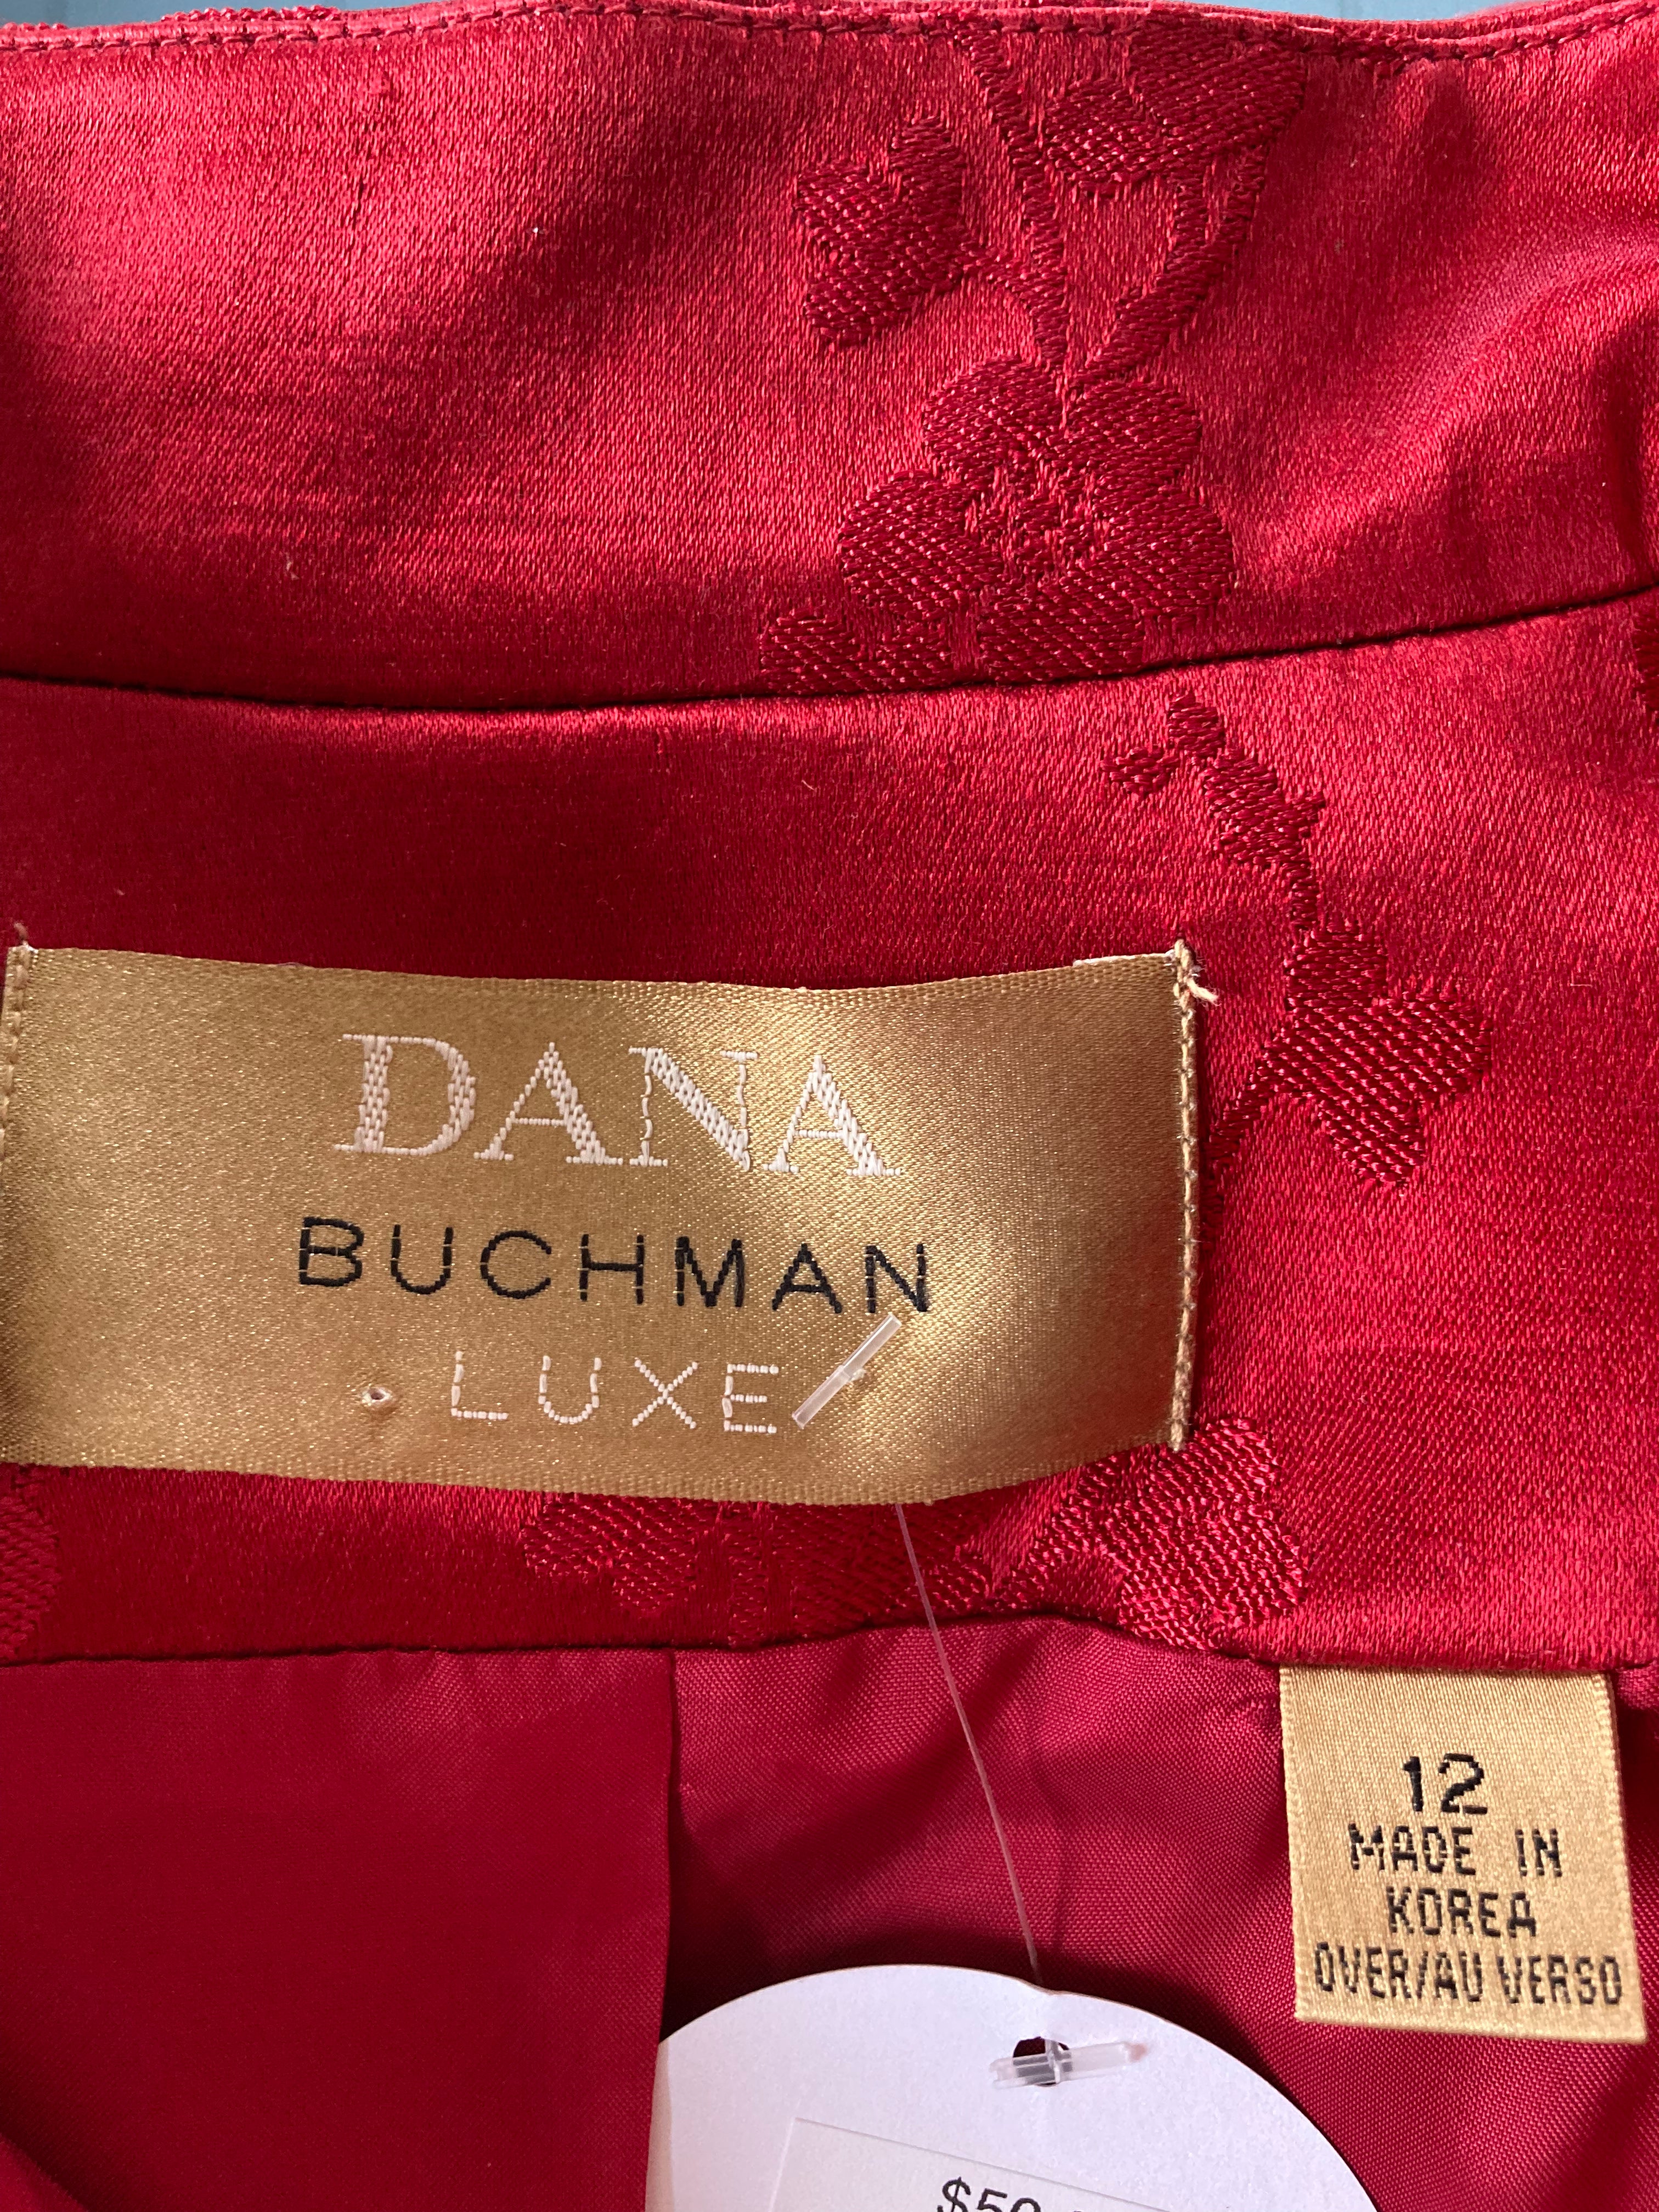 Dana Buchman Vintage Red Suit, 12